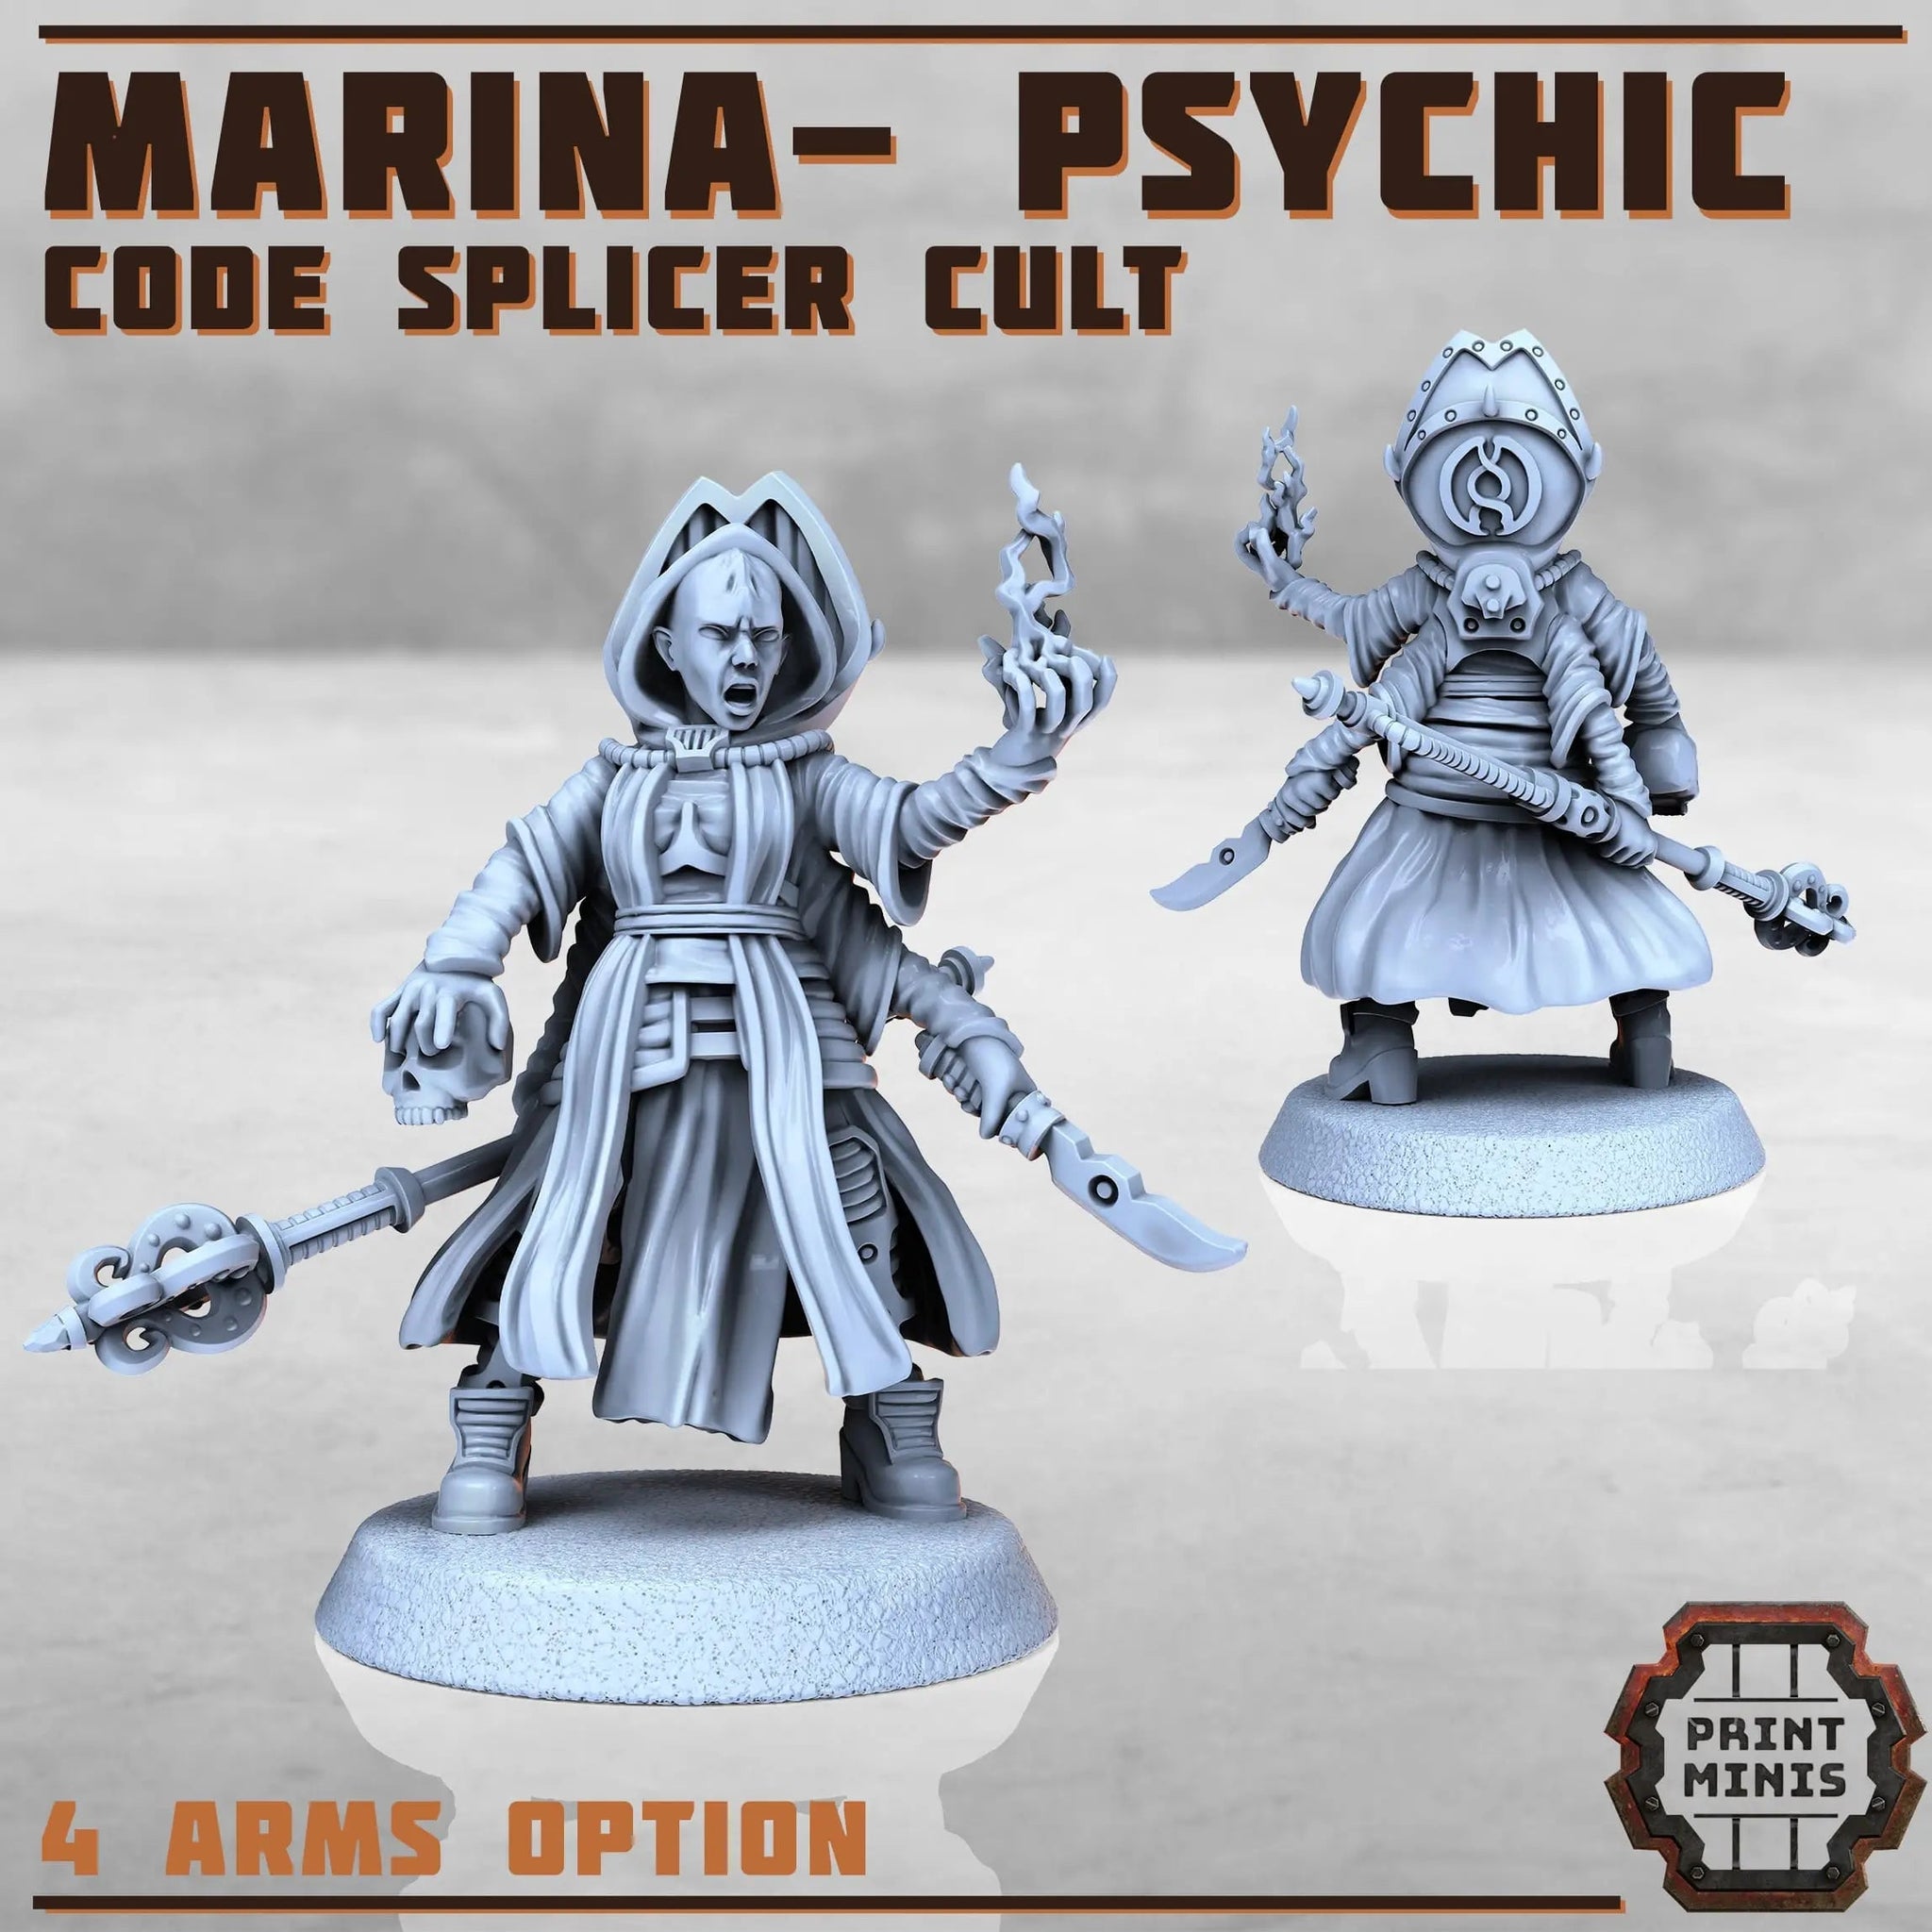 Marina - Code Splicer Cult Psychic HamsterFoundry